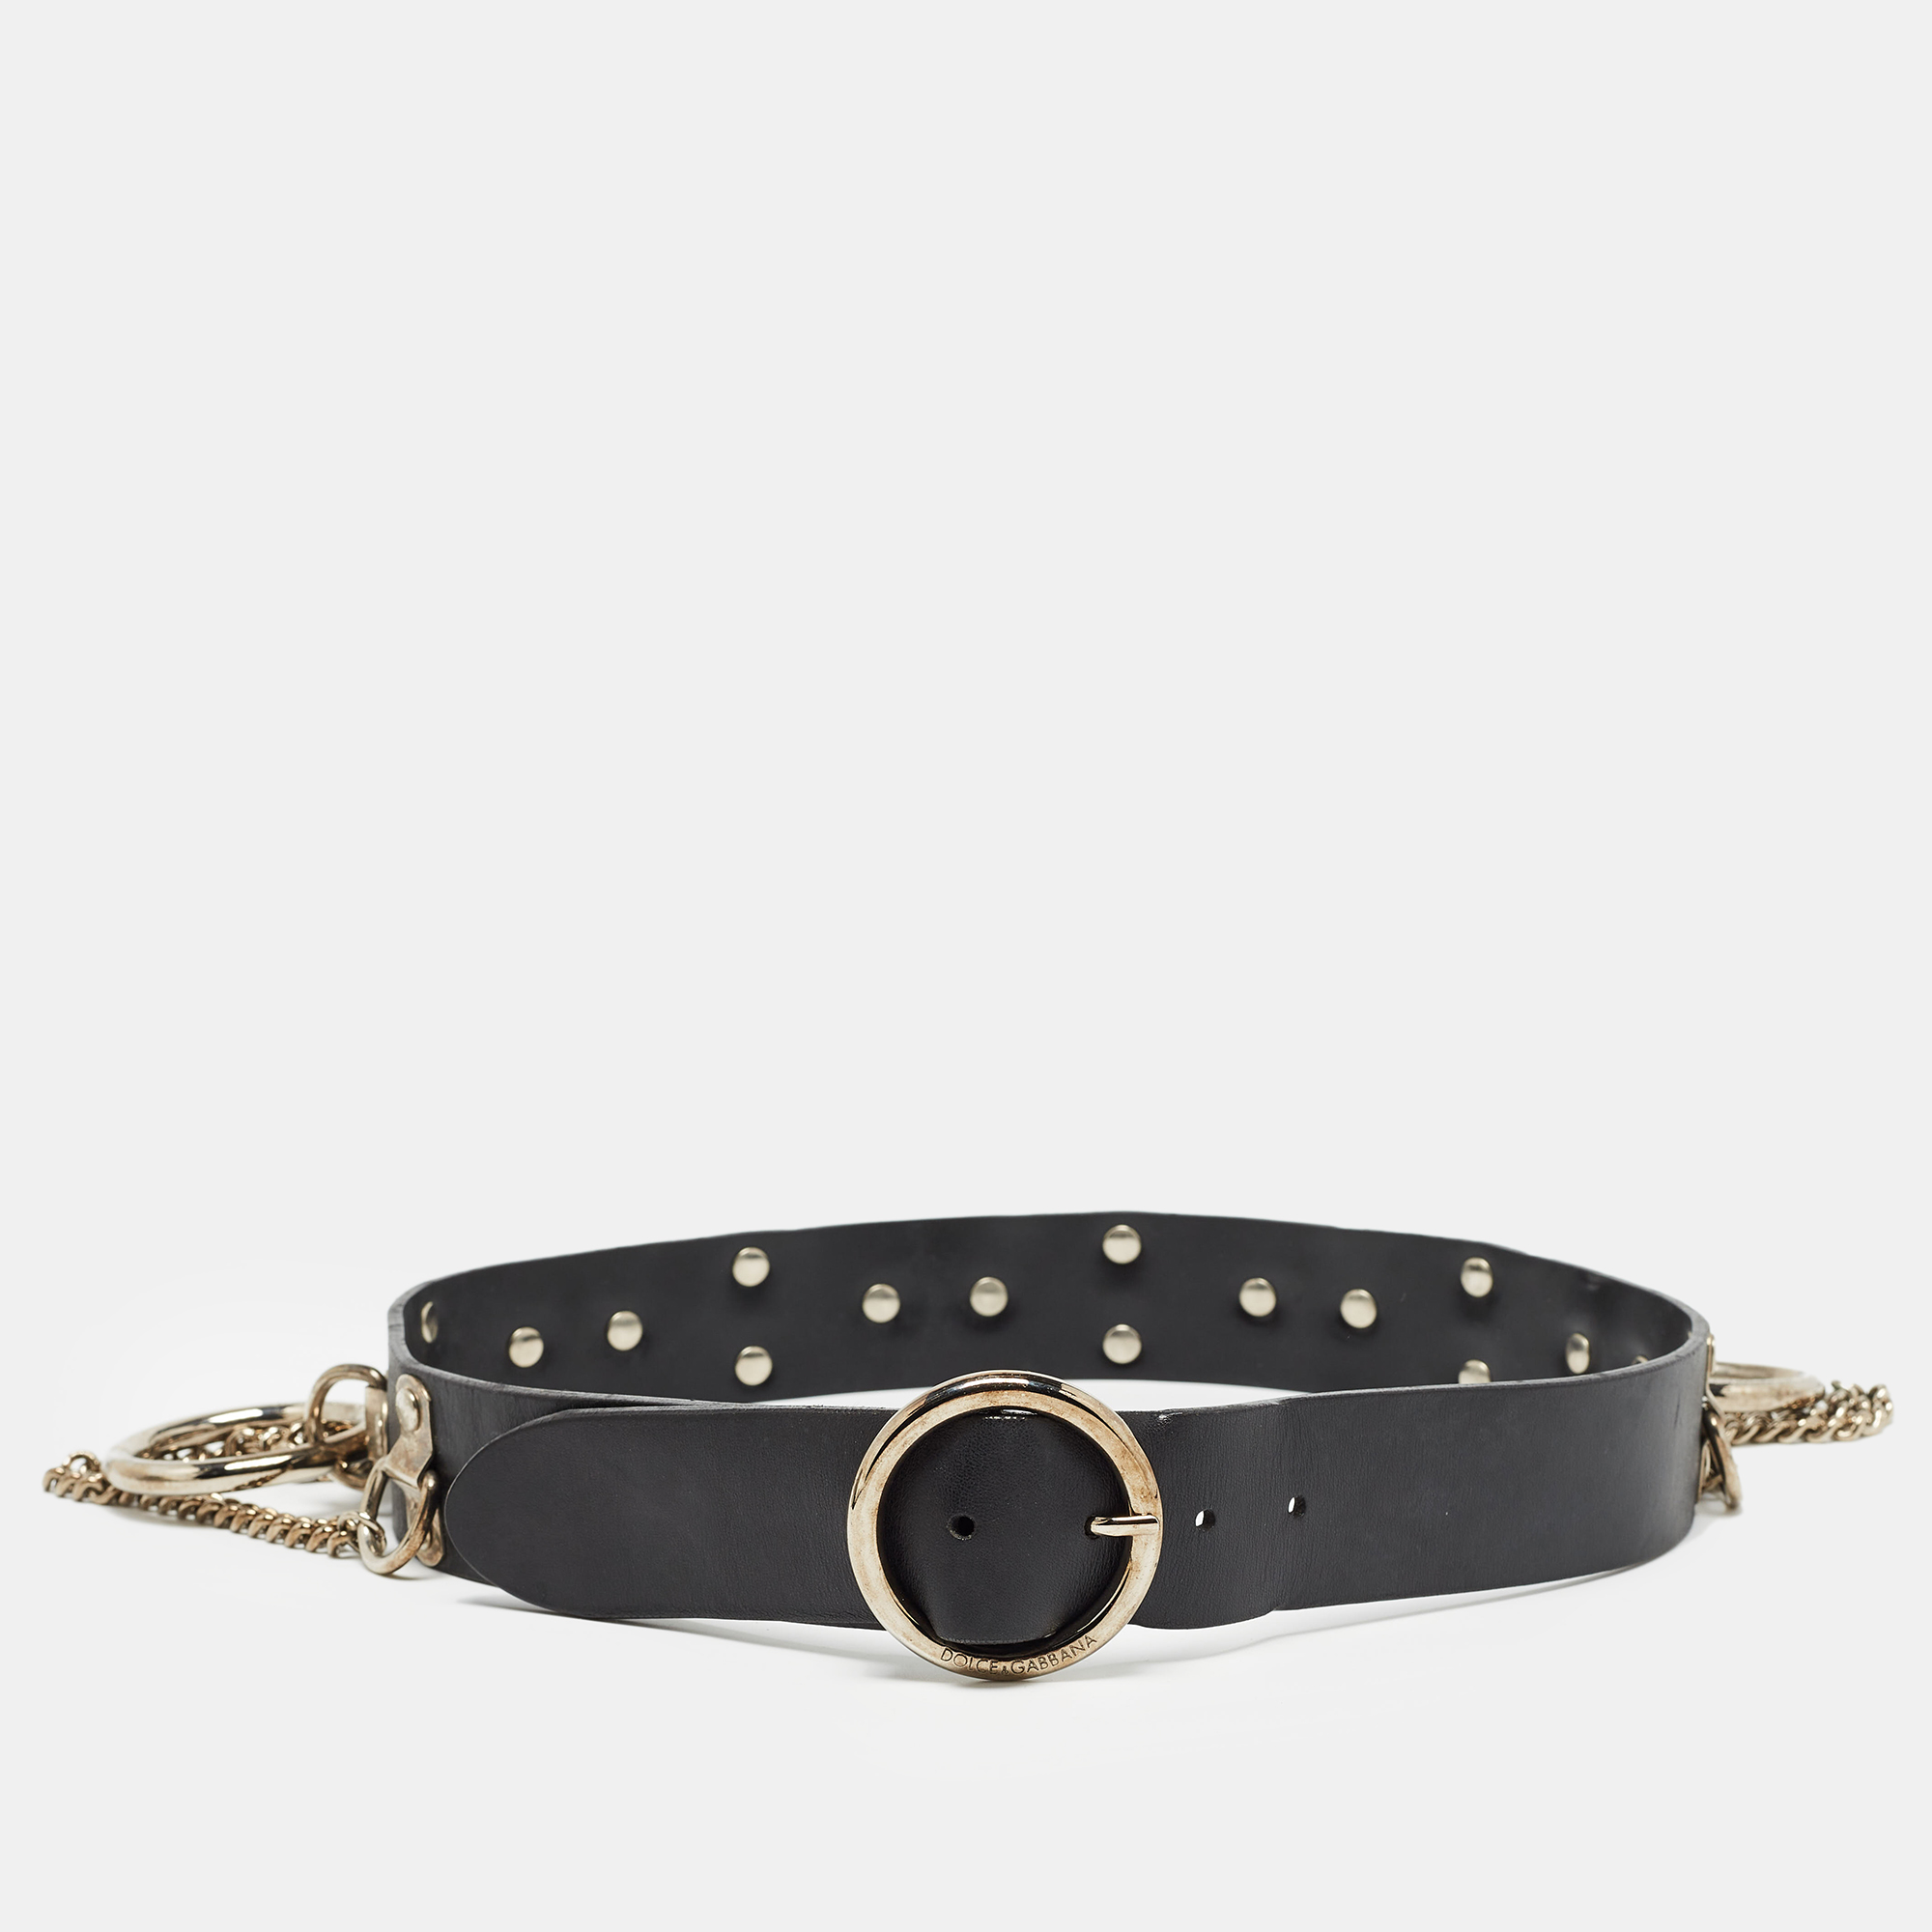 Dolce & gabbana black leather chain ring detail waist belt 85cm